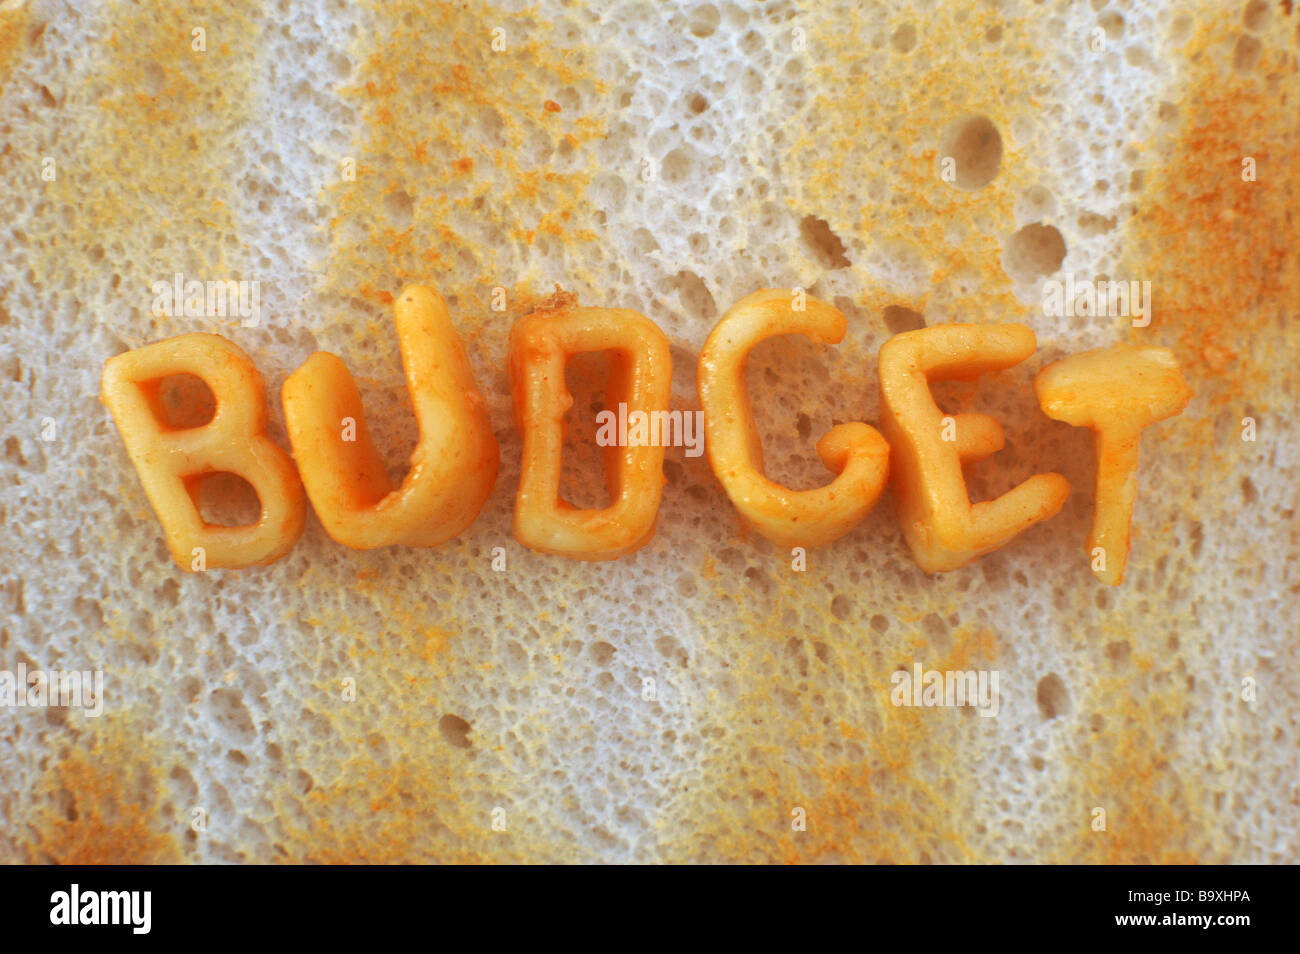 Alphabetti Spaghetti on toast Budget Stock Photo